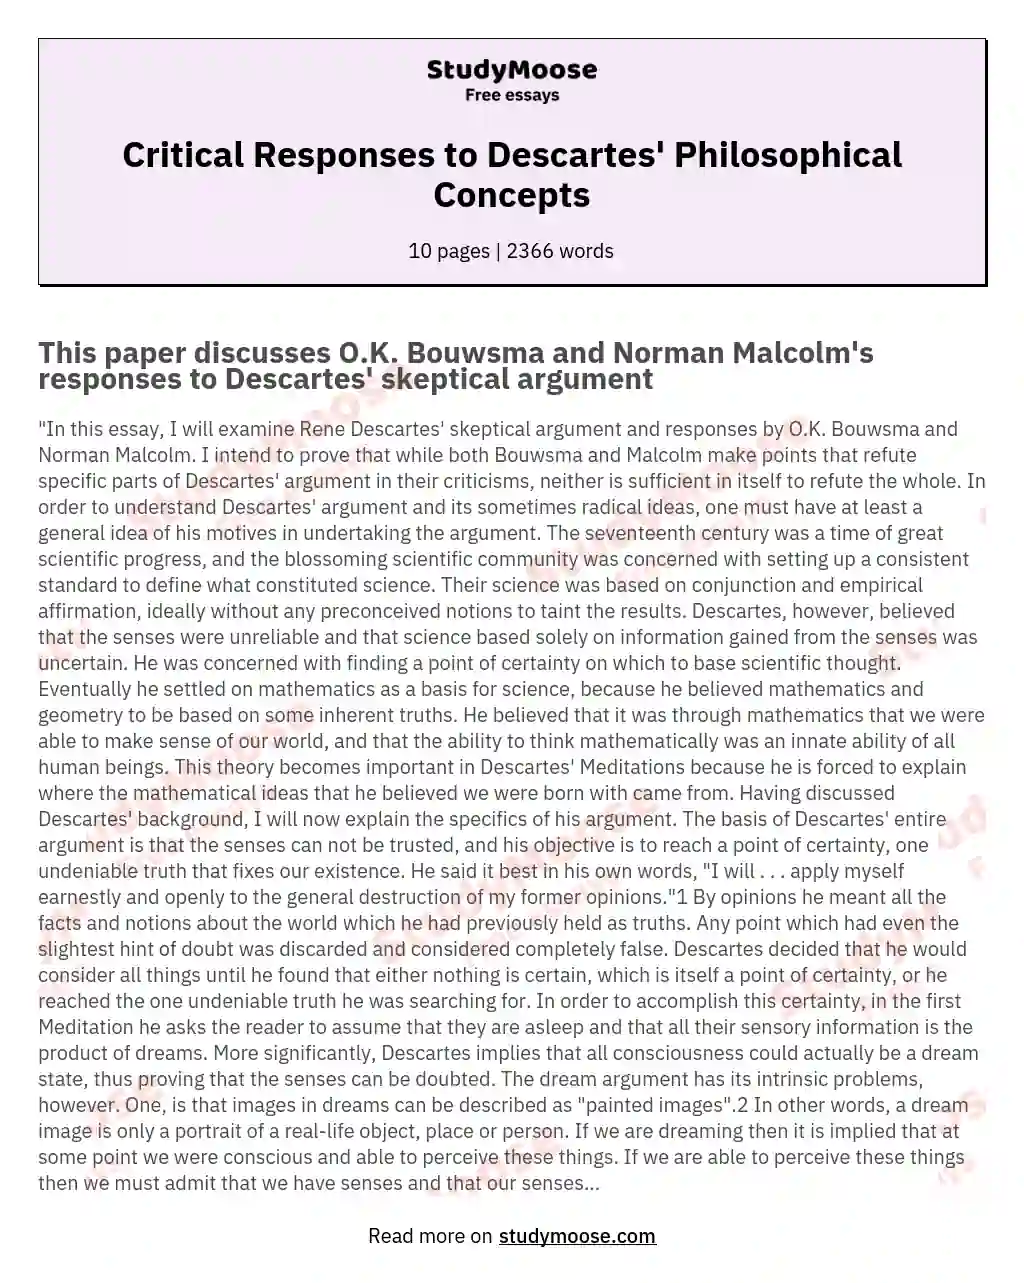 Critical Responses to Descartes' Philosophical Concepts essay